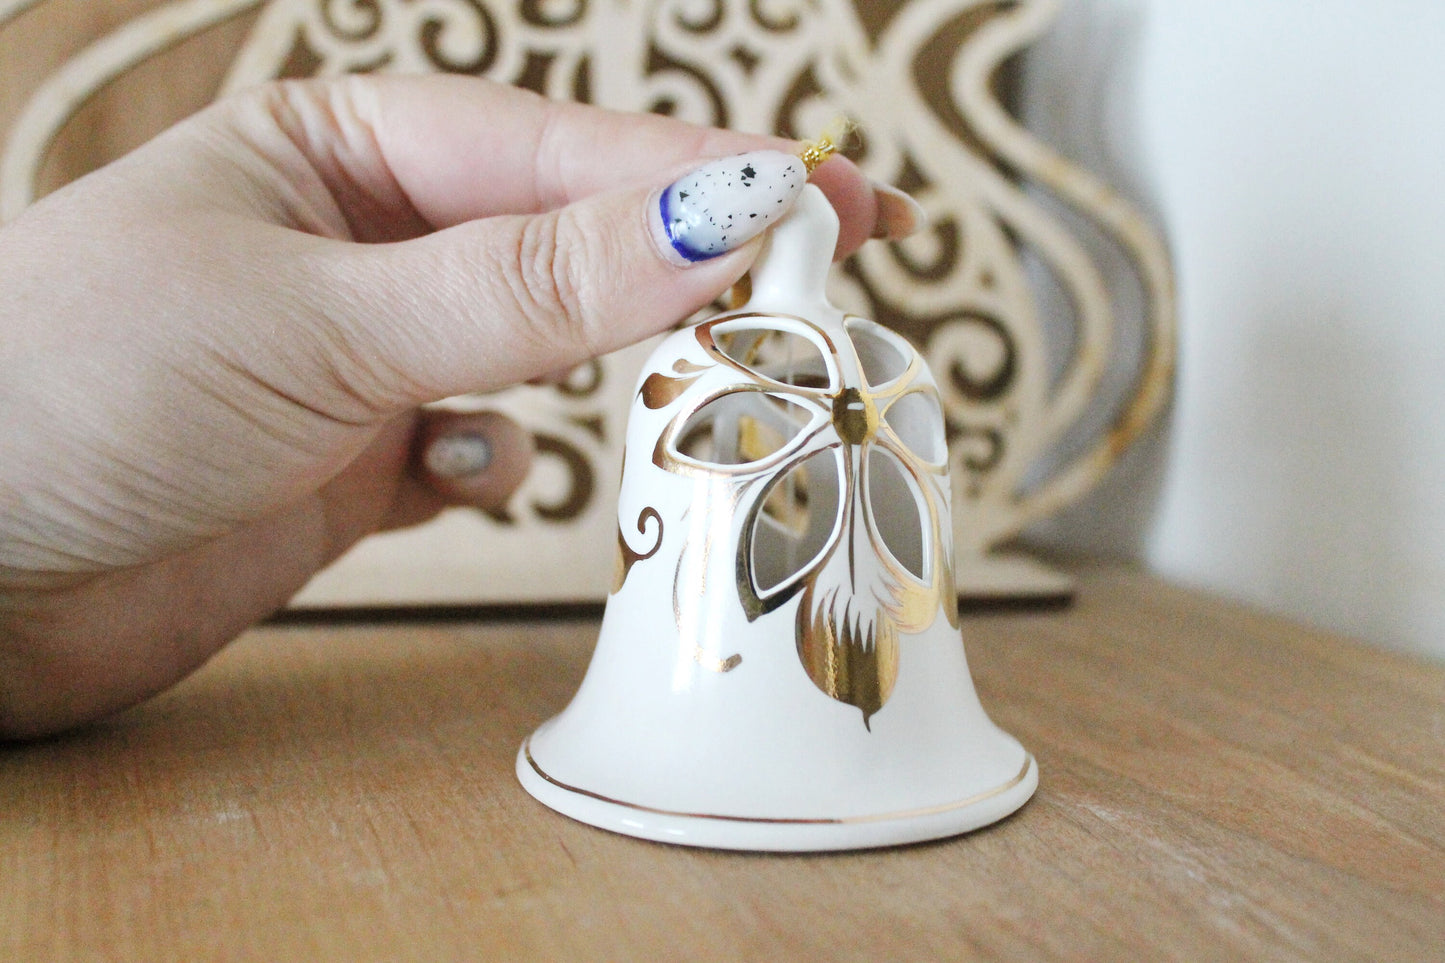 Vintage beautiful ceramic Bell - 3.3 inches - Vintage Souvenir - Germany porcelain